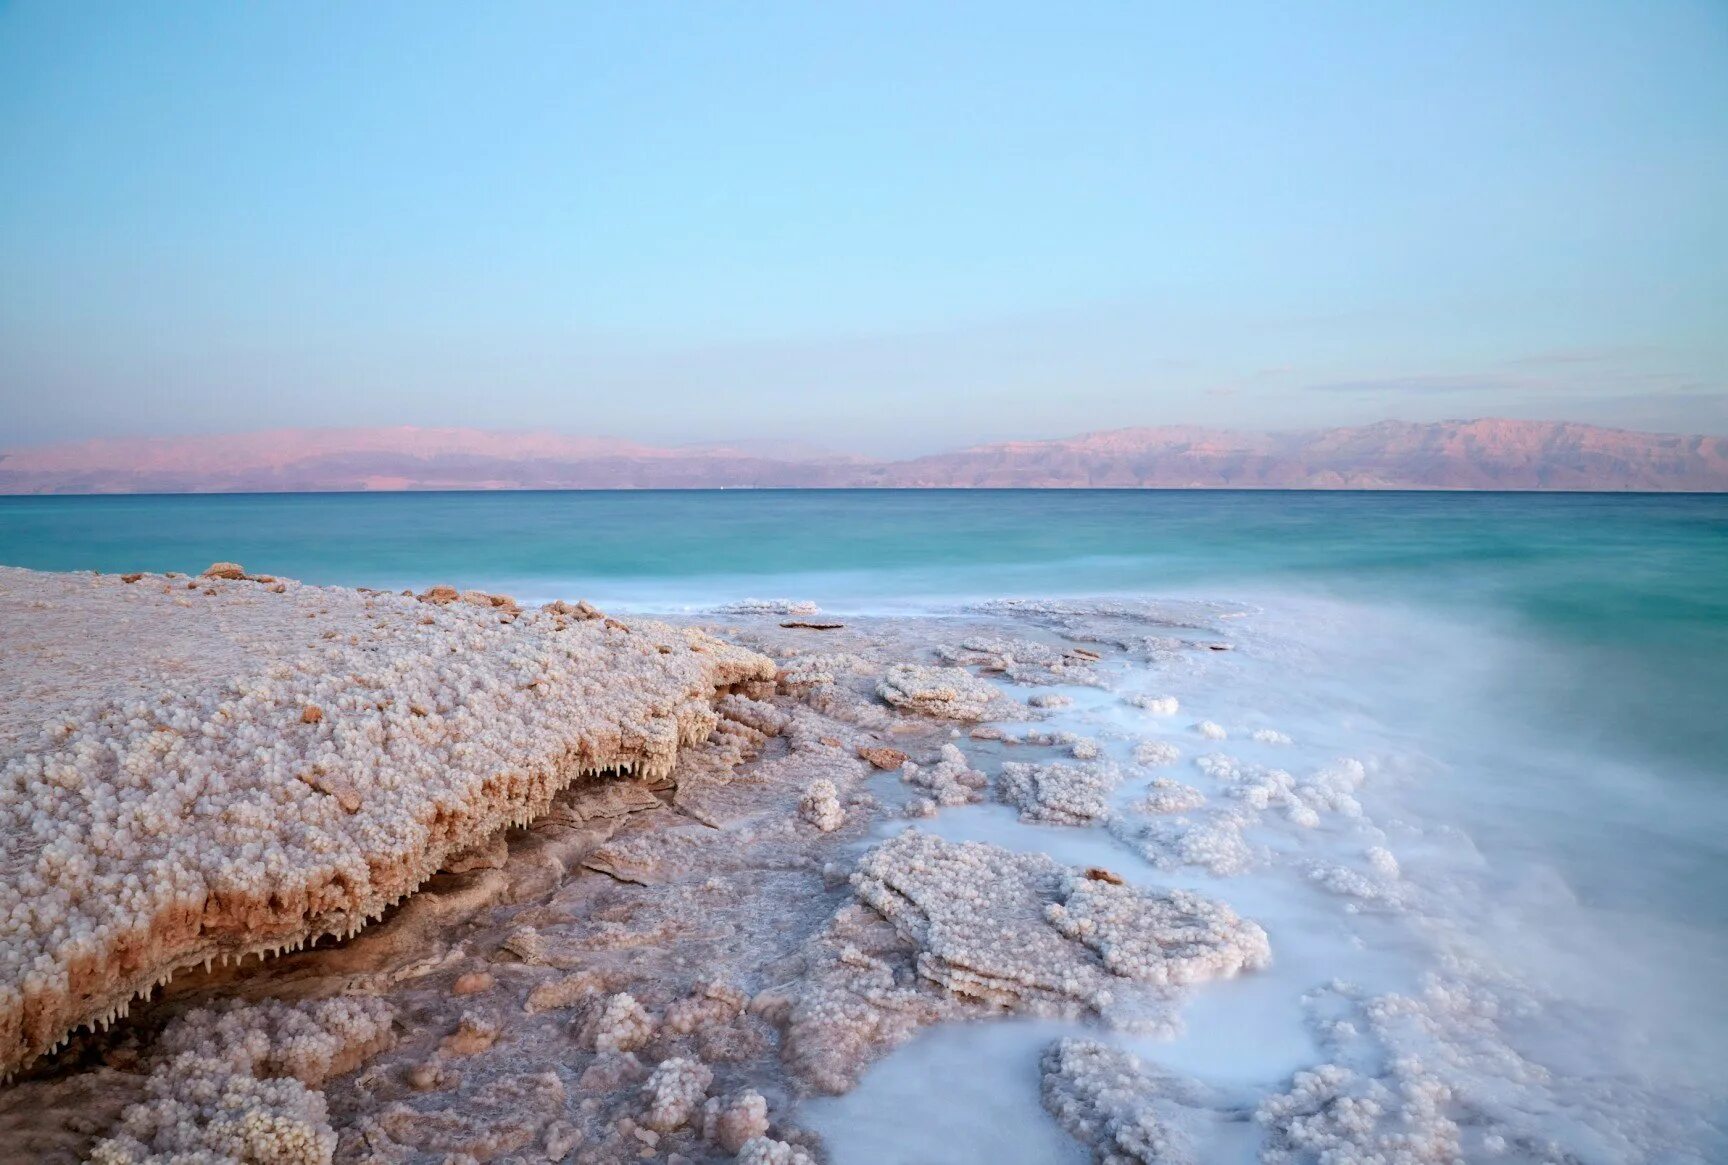 Самое теплое и соленое море африки. Мертвое море (Dead Sea).